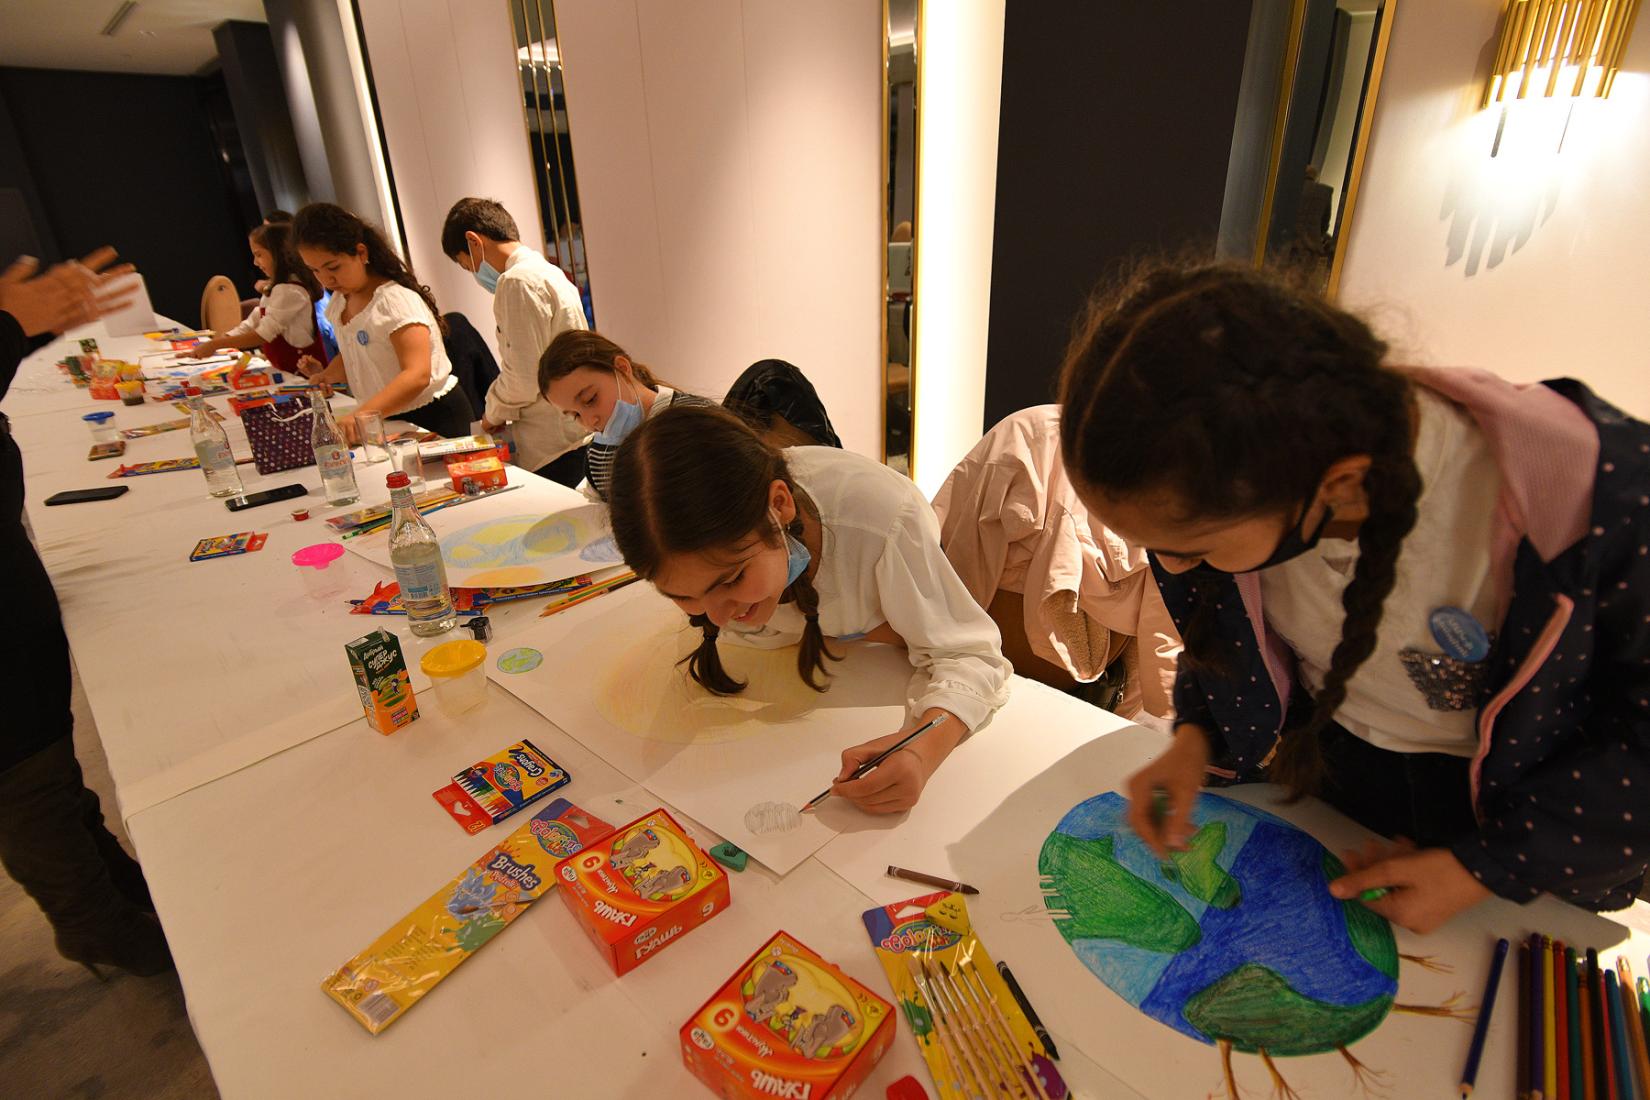 Kids working hard on their paintings!